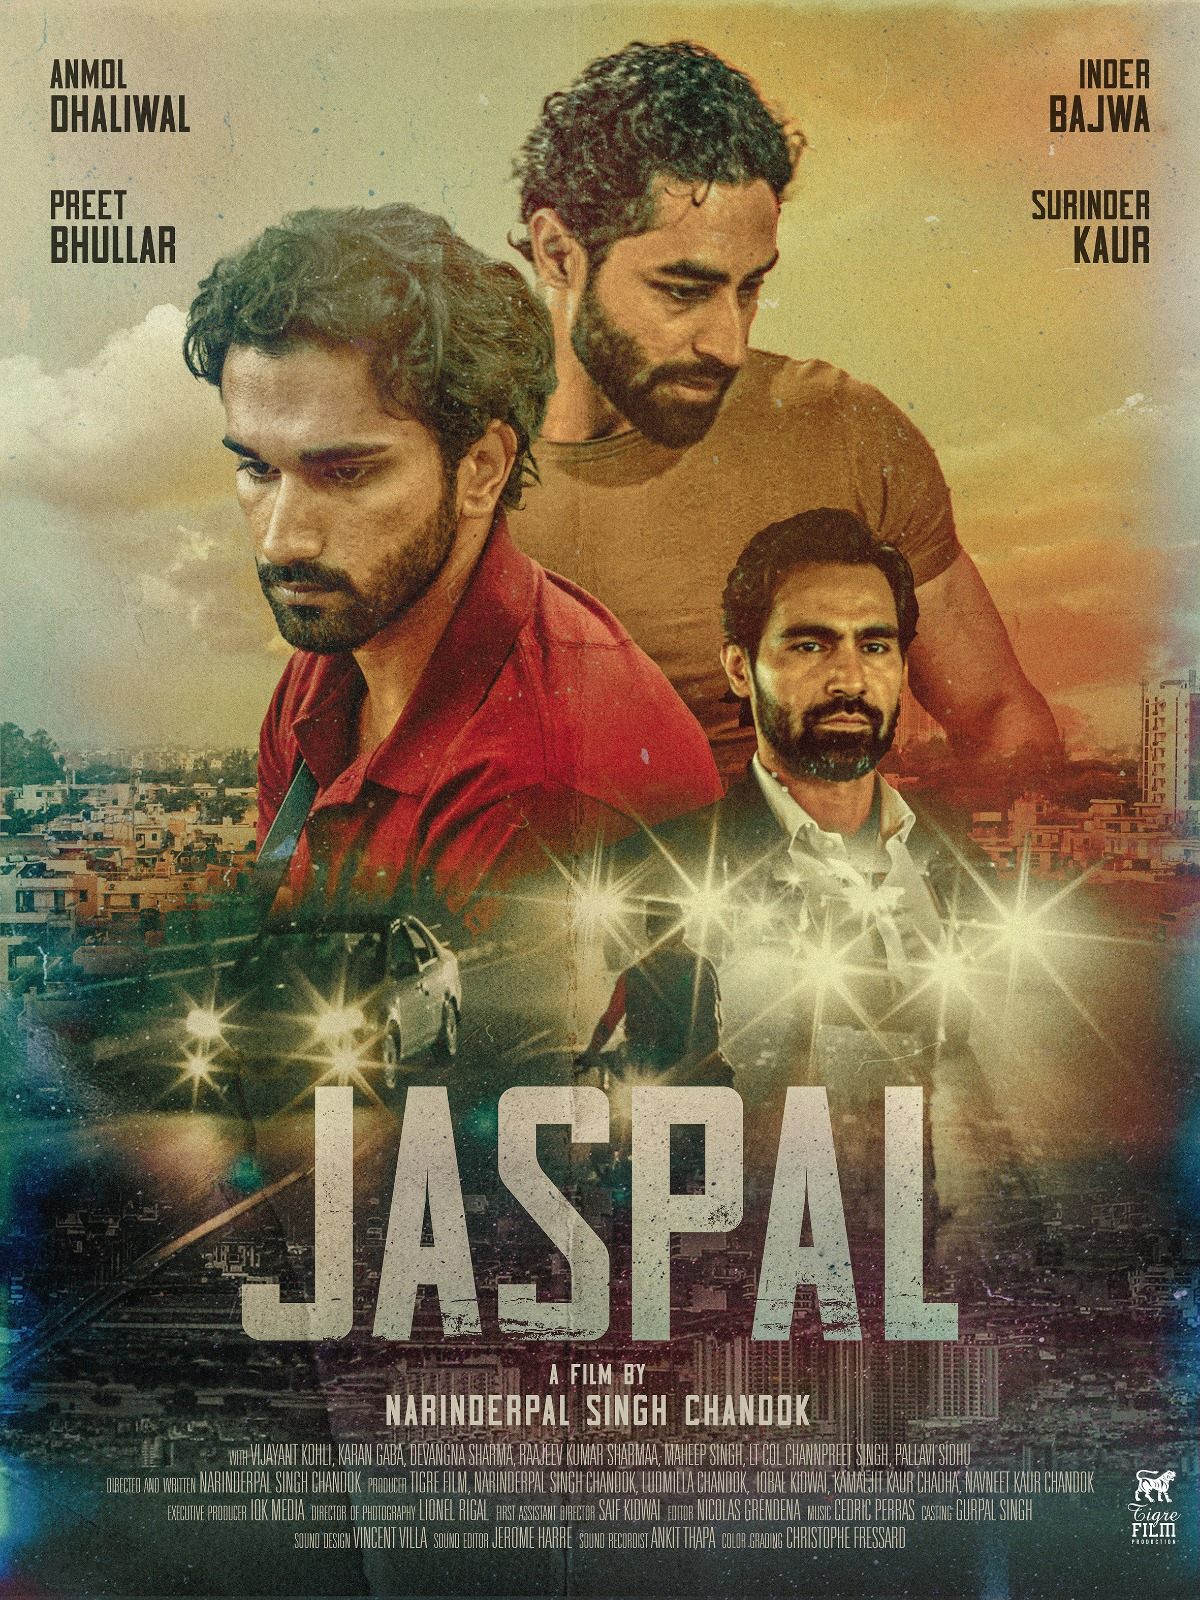 Jaspal Hindi Dubbed Full Movie Watch Online